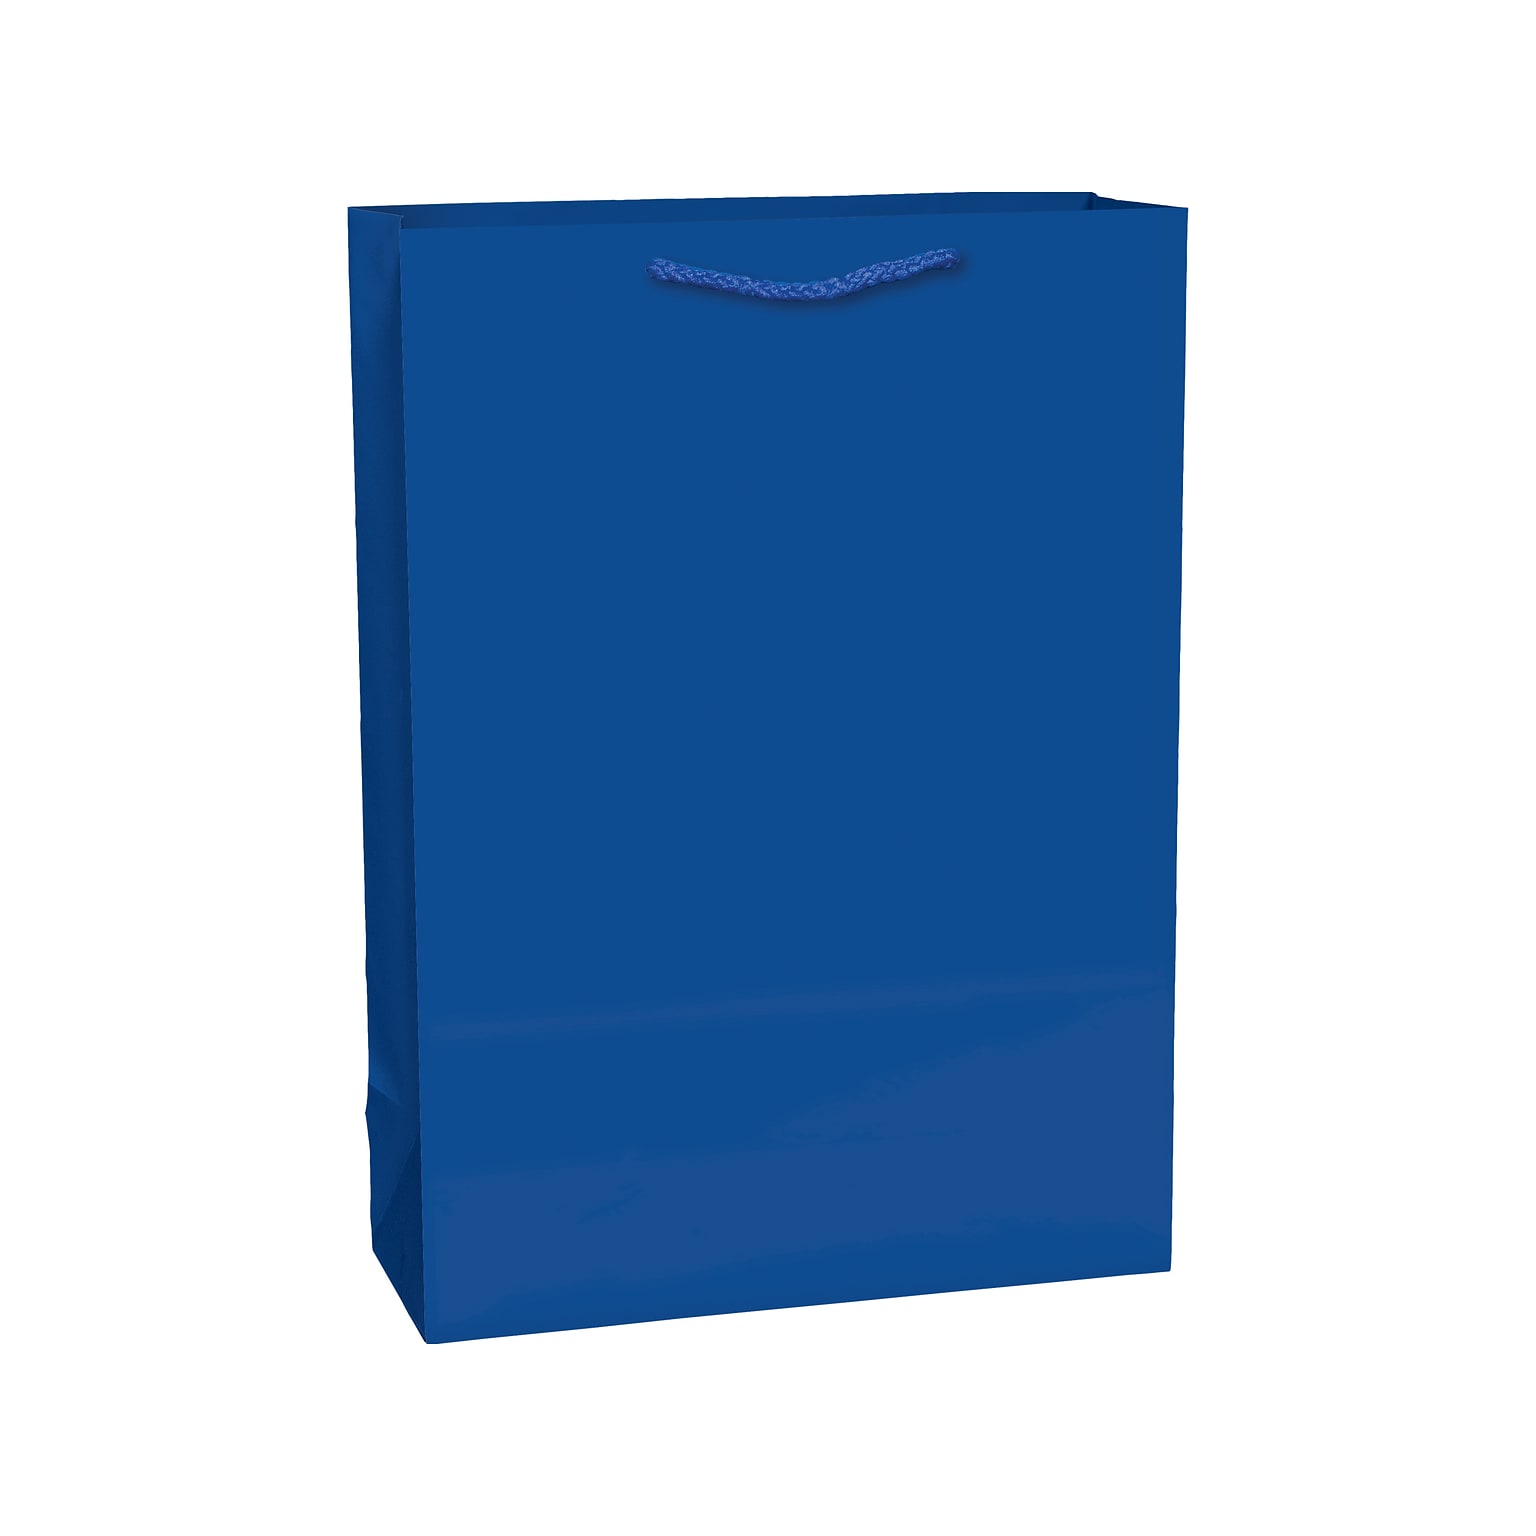 Amscan Glossy Paper Gift Bag, 17 x 12.25, Bright Royal Blue, 6 Bags/Pack (47098.105)